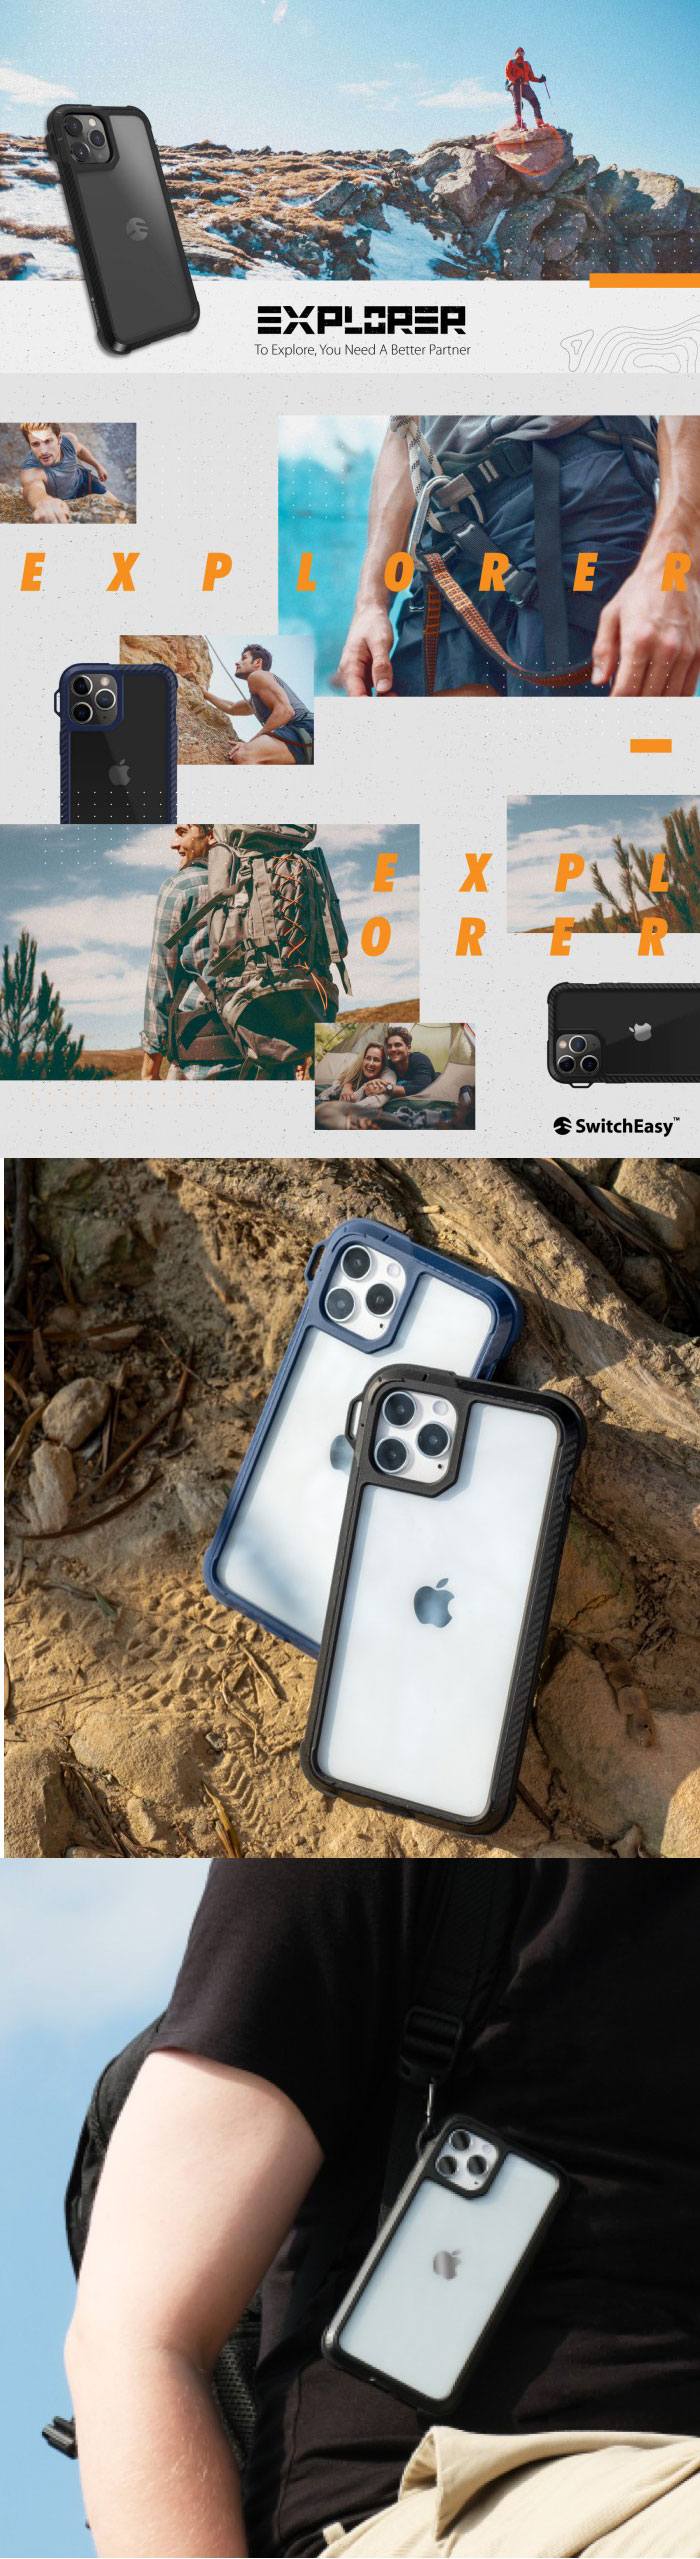 Ốp lưng iPhone 12 Pro Max Switcheasy Explorer 4